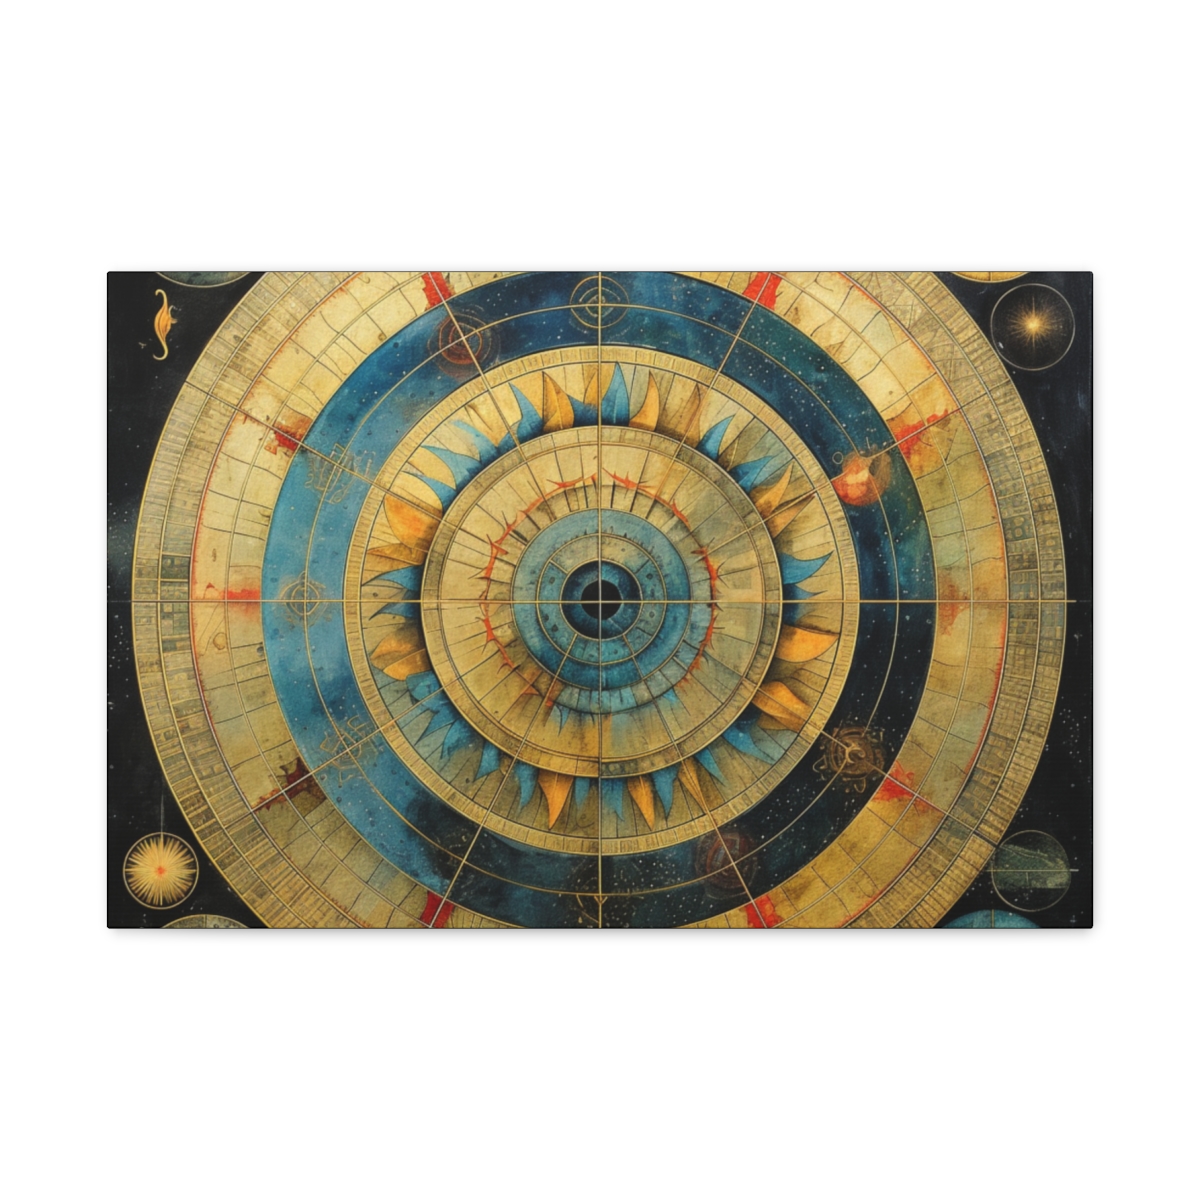 Astrology Art Print: The Birth Chart